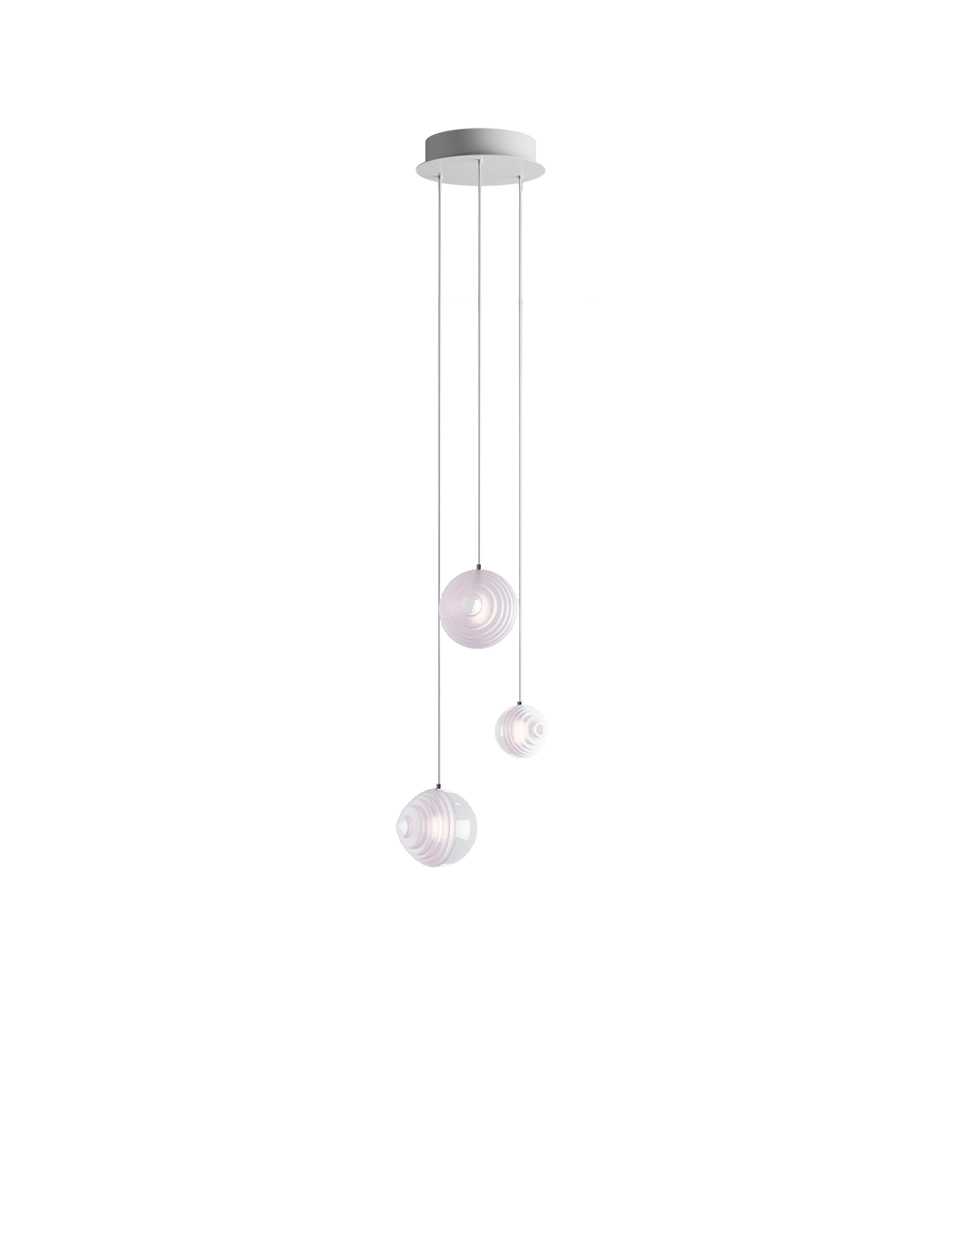 Bomma-Dark-and-Bright-Star-chandelier-3-circular-white